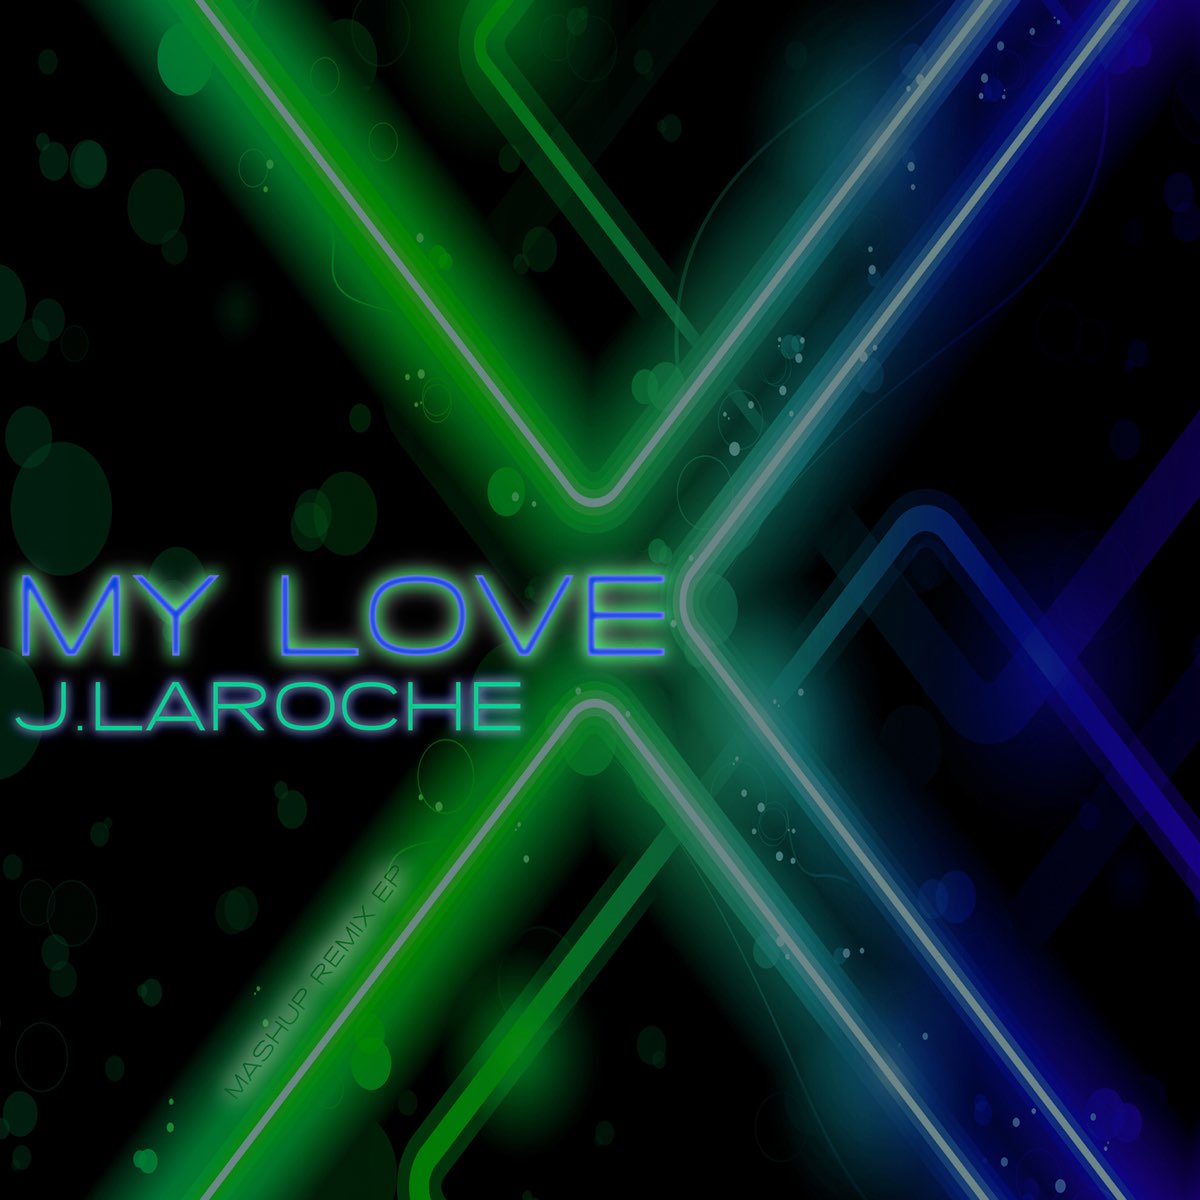 My Love (Mashup Remix) EP by J. LaRoche on Apple Music